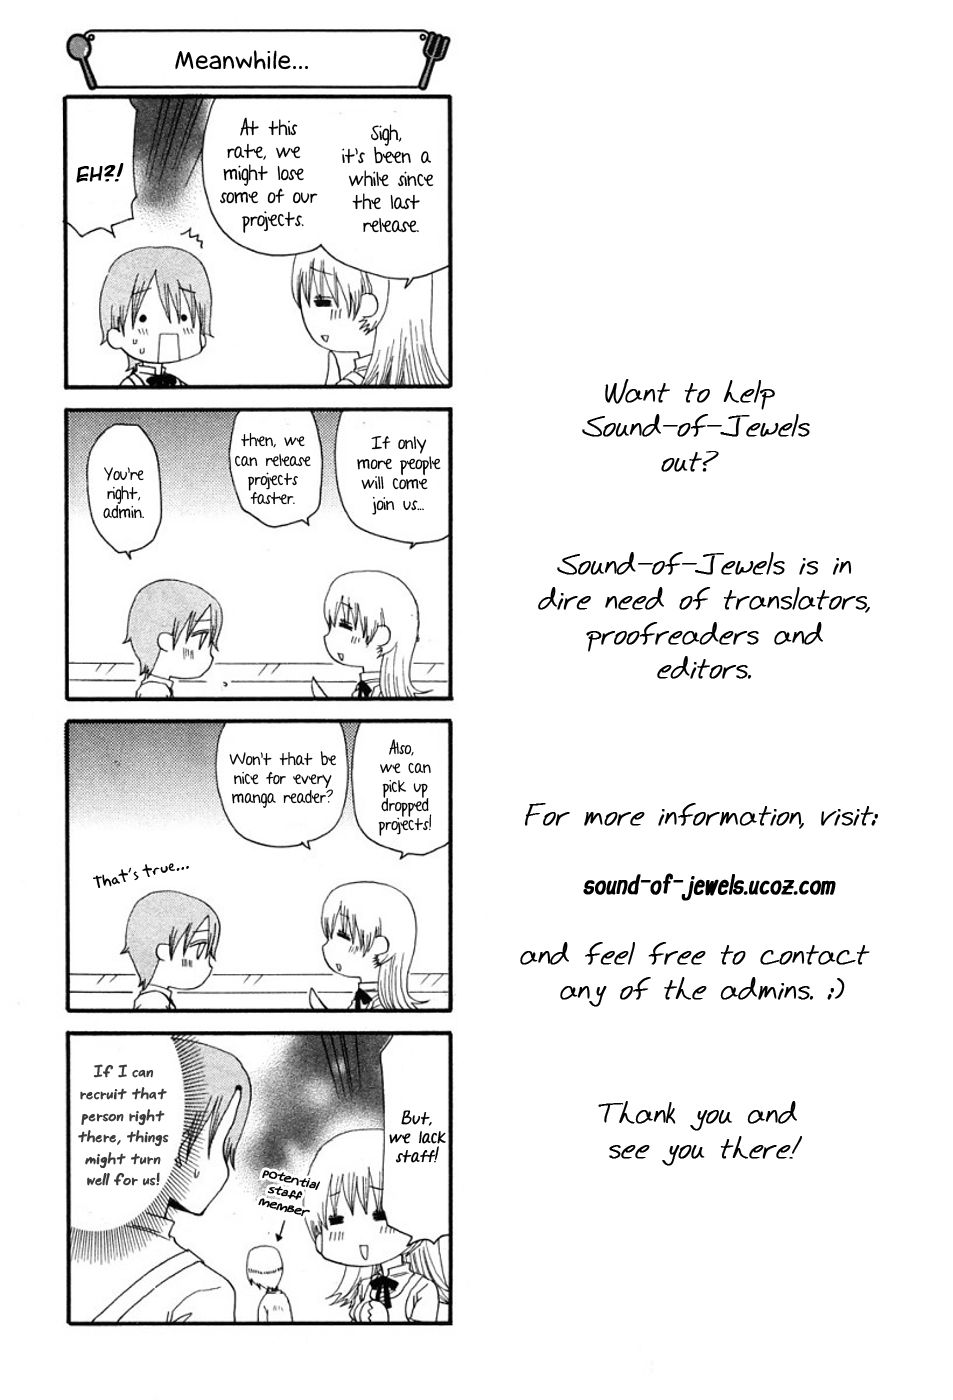 Long Goodbye - Page 1